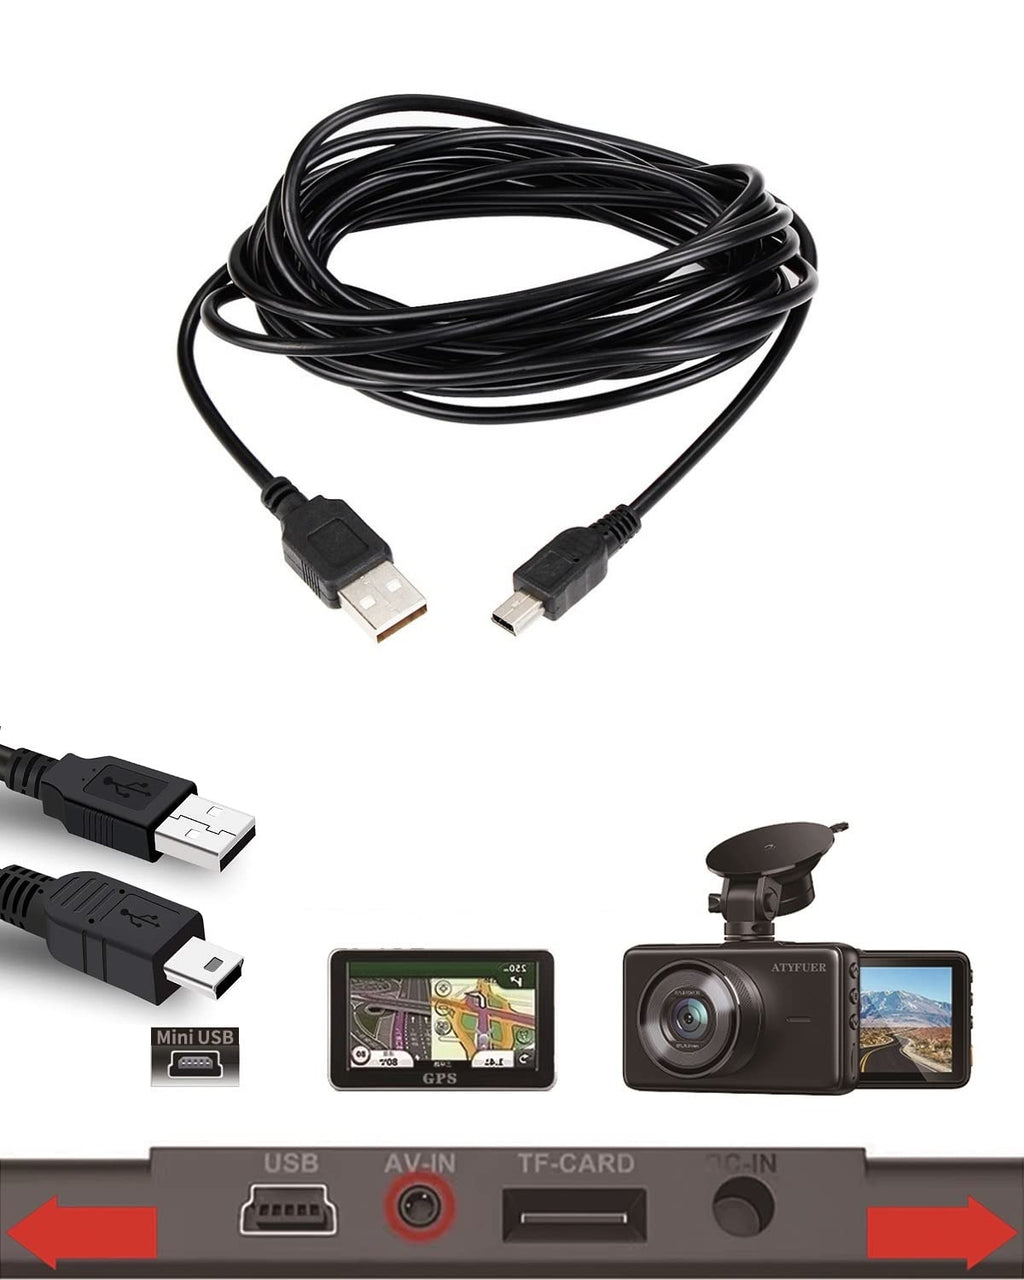  [AUSTRALIA] - 2-Pack GPS Navigator Cable，for Garmin GPS Navigator, Dash Cam,MP3 Player Charging， Data Transfer Cable, 11.5ft Mini USB Cable for Garmin Charging Cable for Garmin System Mini USB Cable